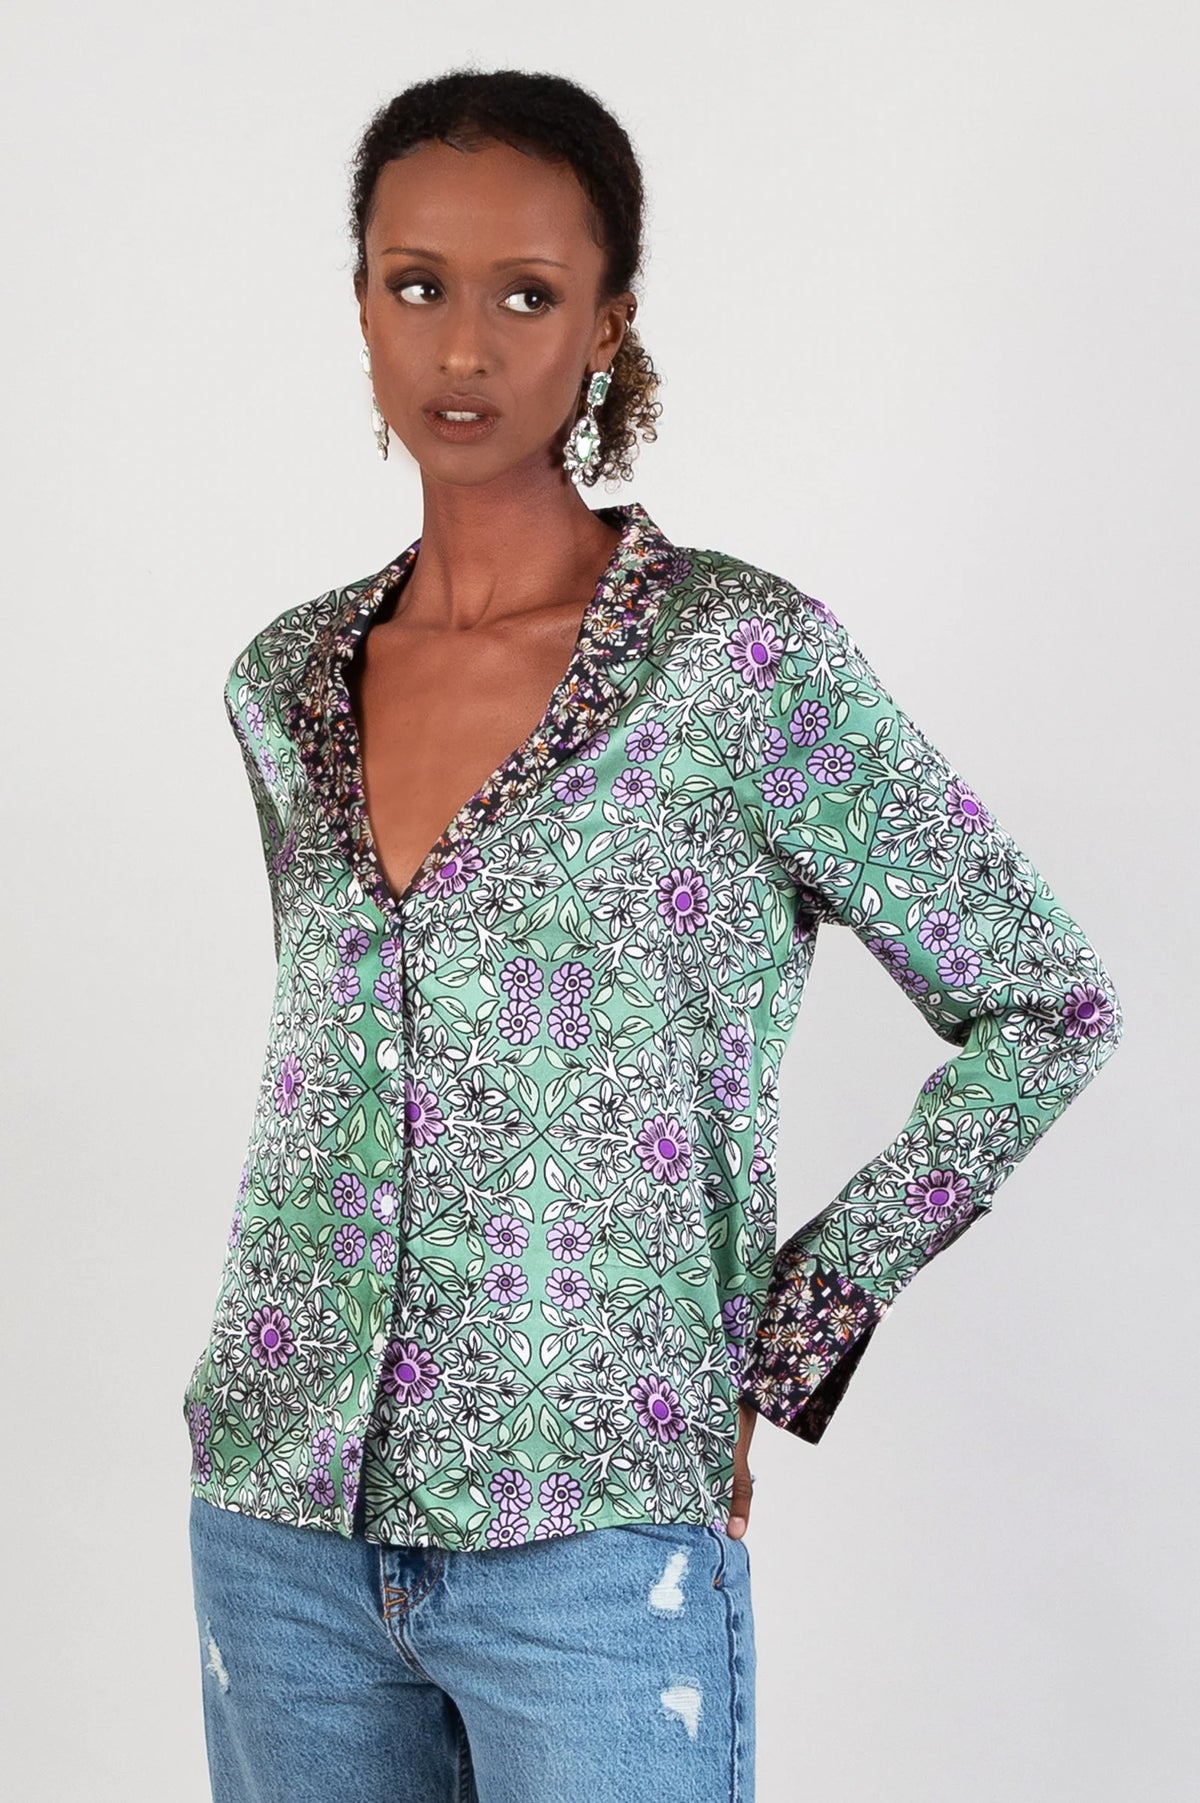 Green and purple tile print blazer style button through shirt